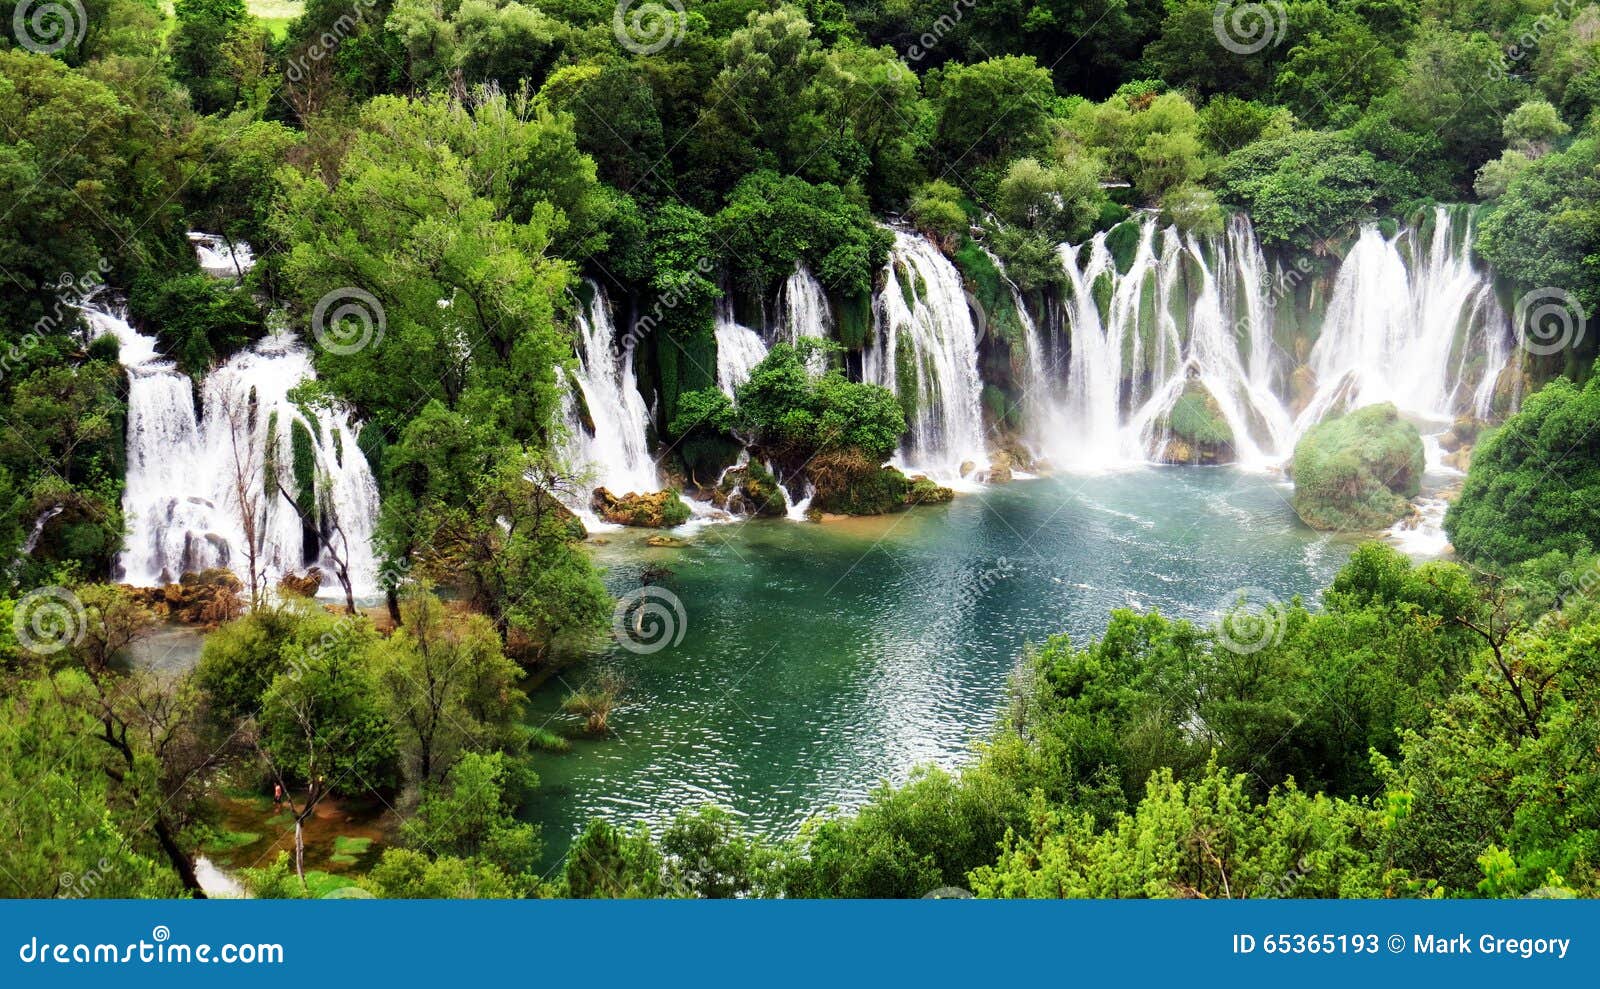 kravice falls, bosnia & herzegovina